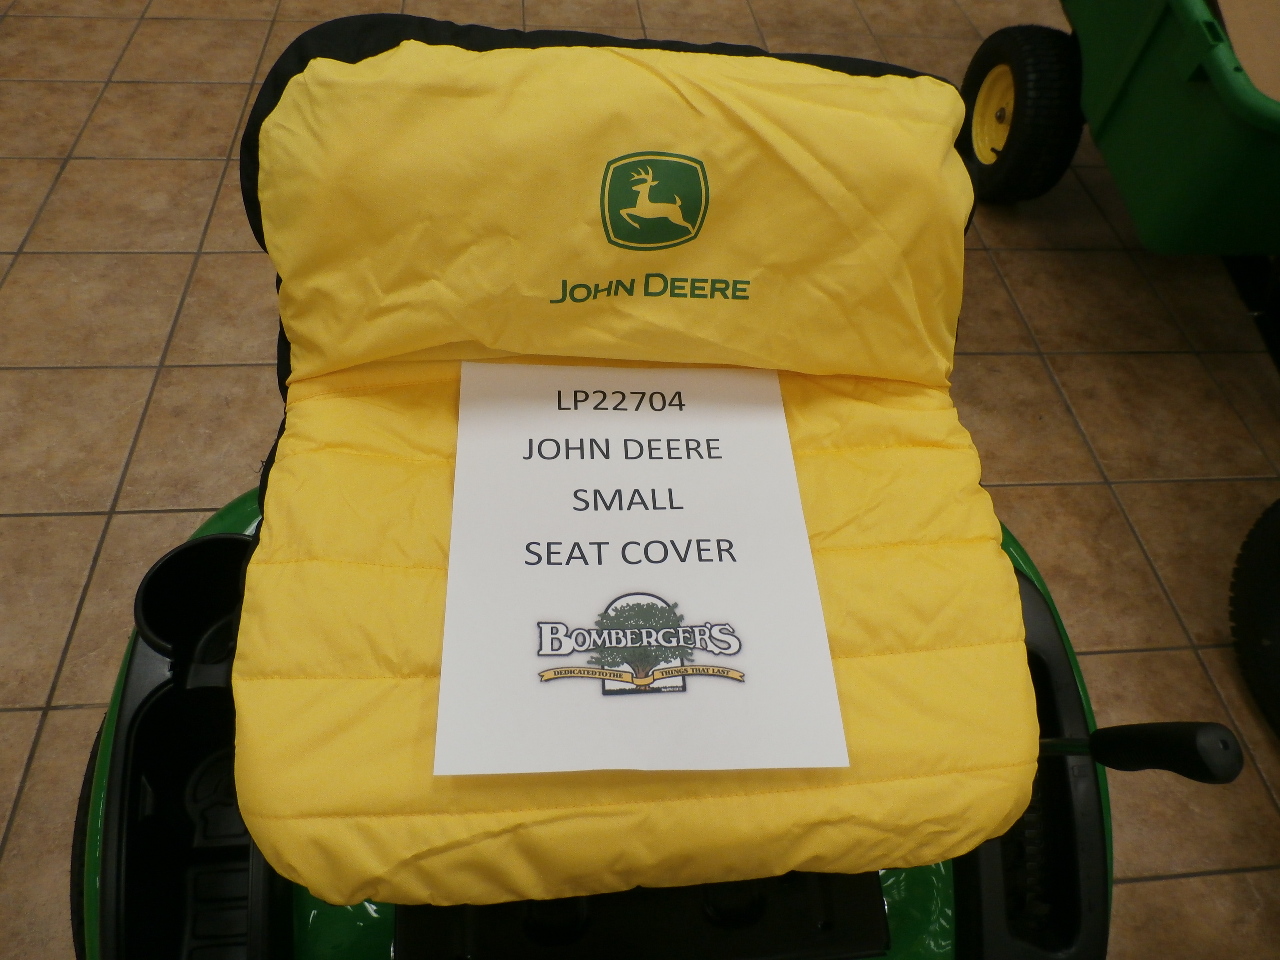 John Deere small seat cover 11 inch LP22704